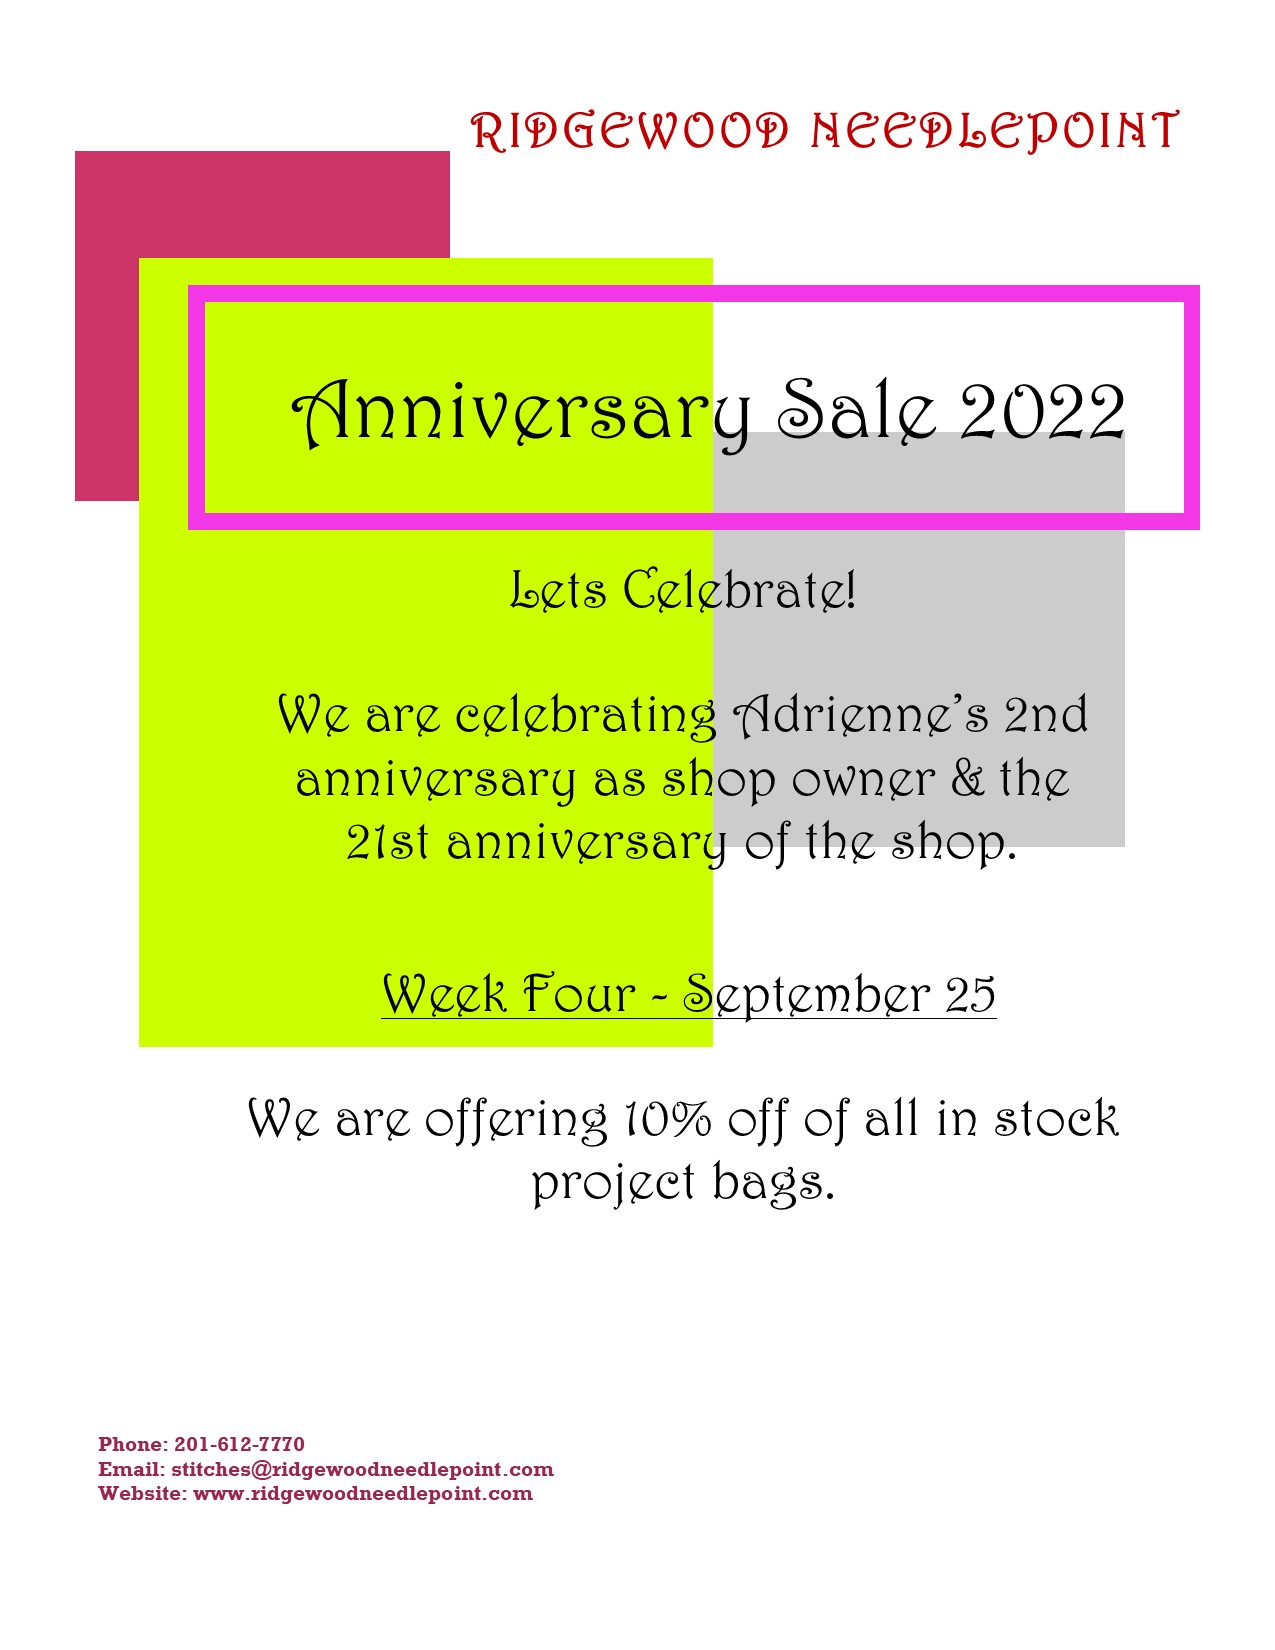 9-25-22 Anniversary Sale